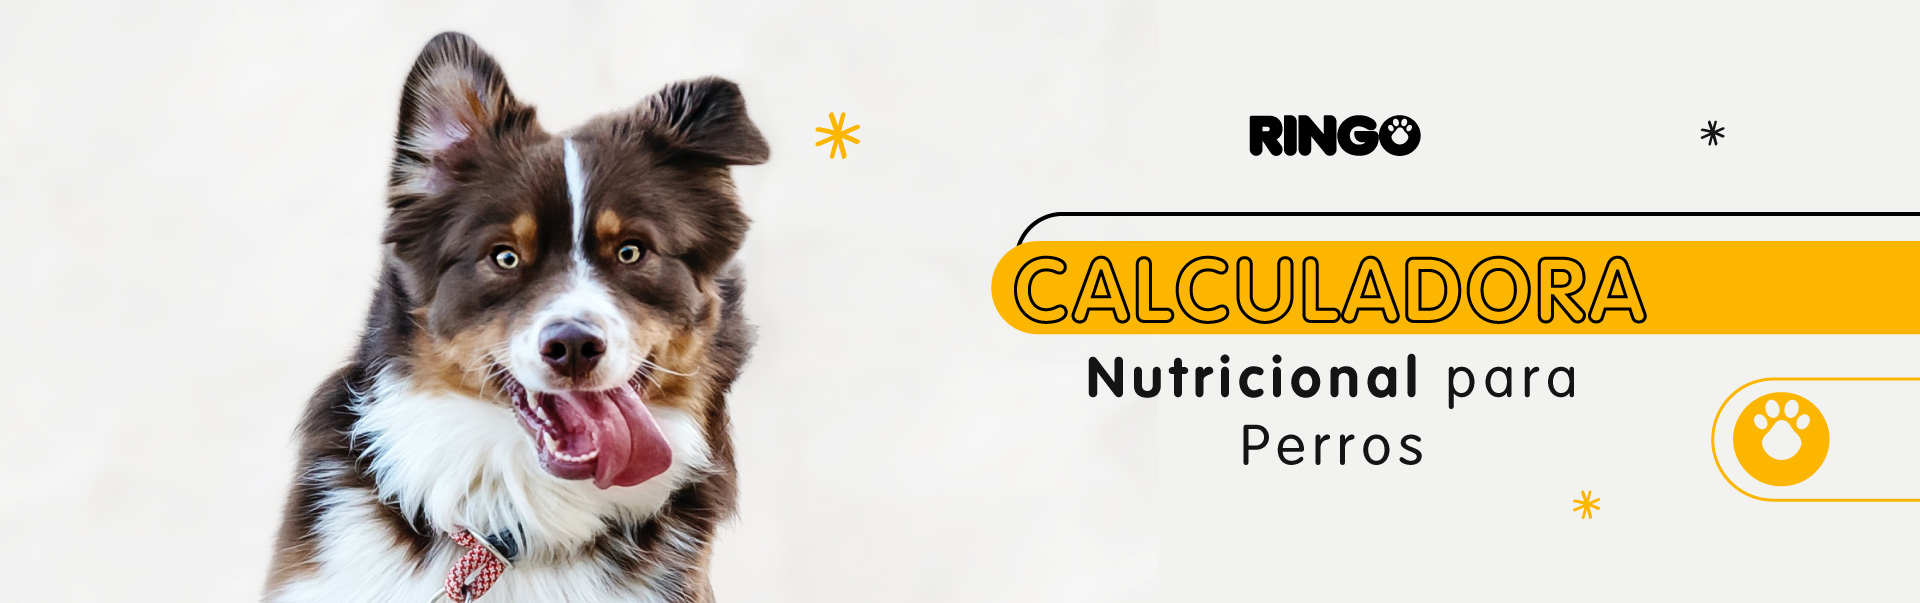 Ringo calculadora de alimento para perros